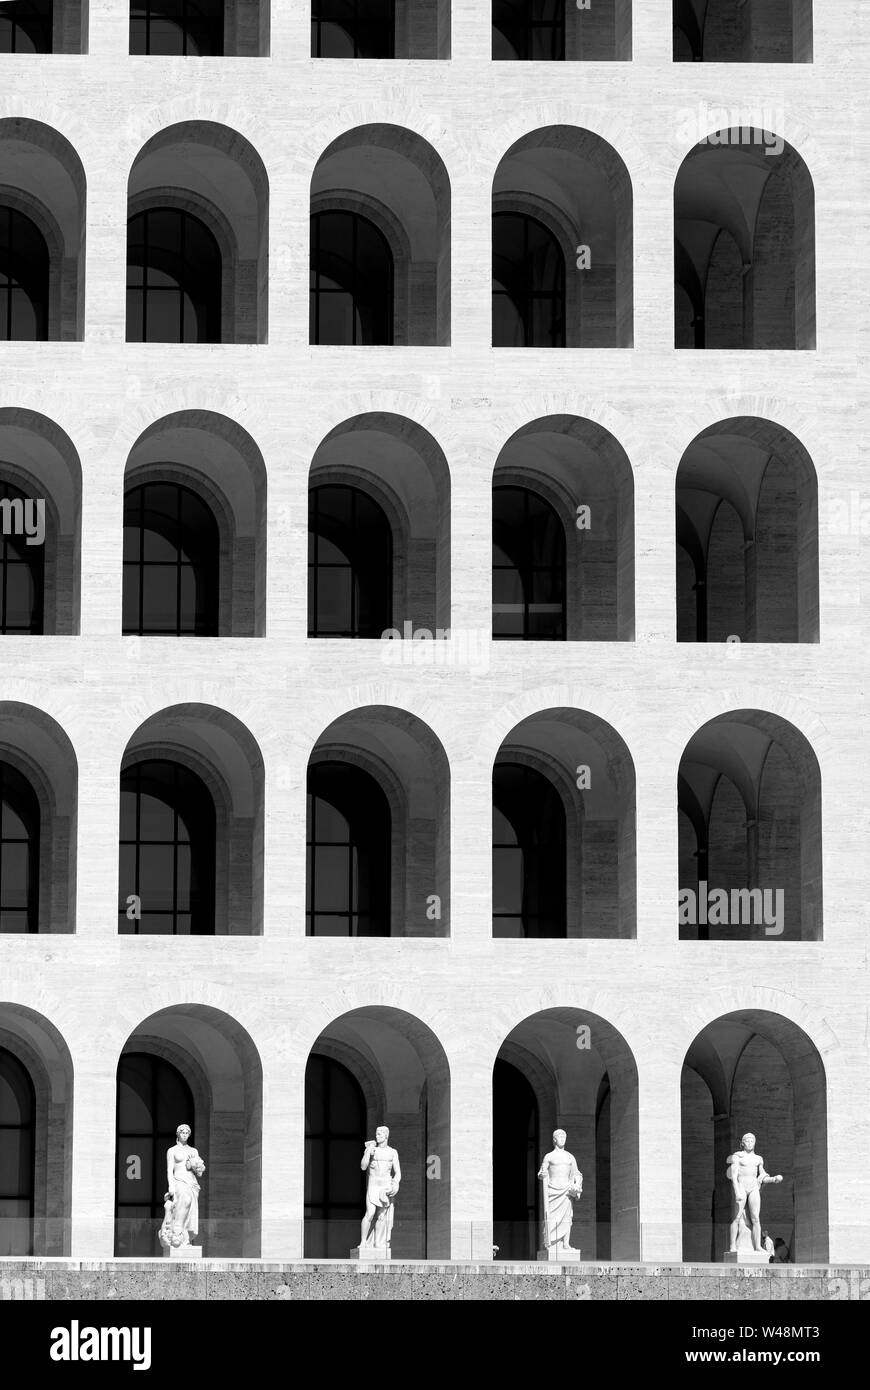 Le Palazzo della Civiltà del Lavoro, conçu en 1937 par Marcello Piacentini, pour l'Esposizione Universale Roma ou EUR, Rome, Italie. Banque D'Images